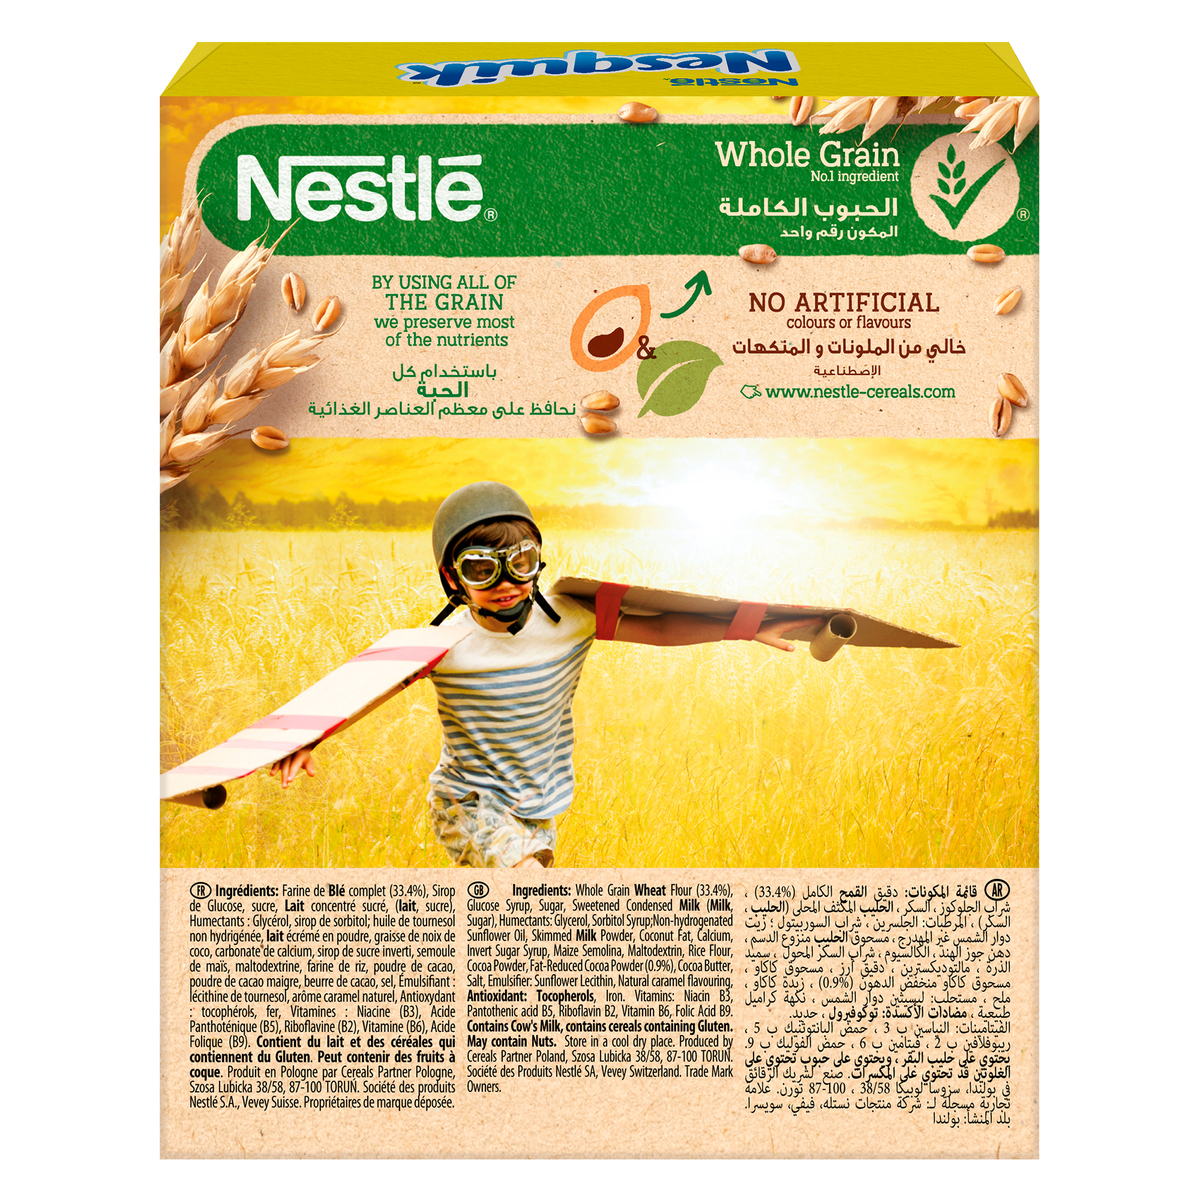 Nestle Nesquik Chocolate Cereal Bar 6 x 25 g